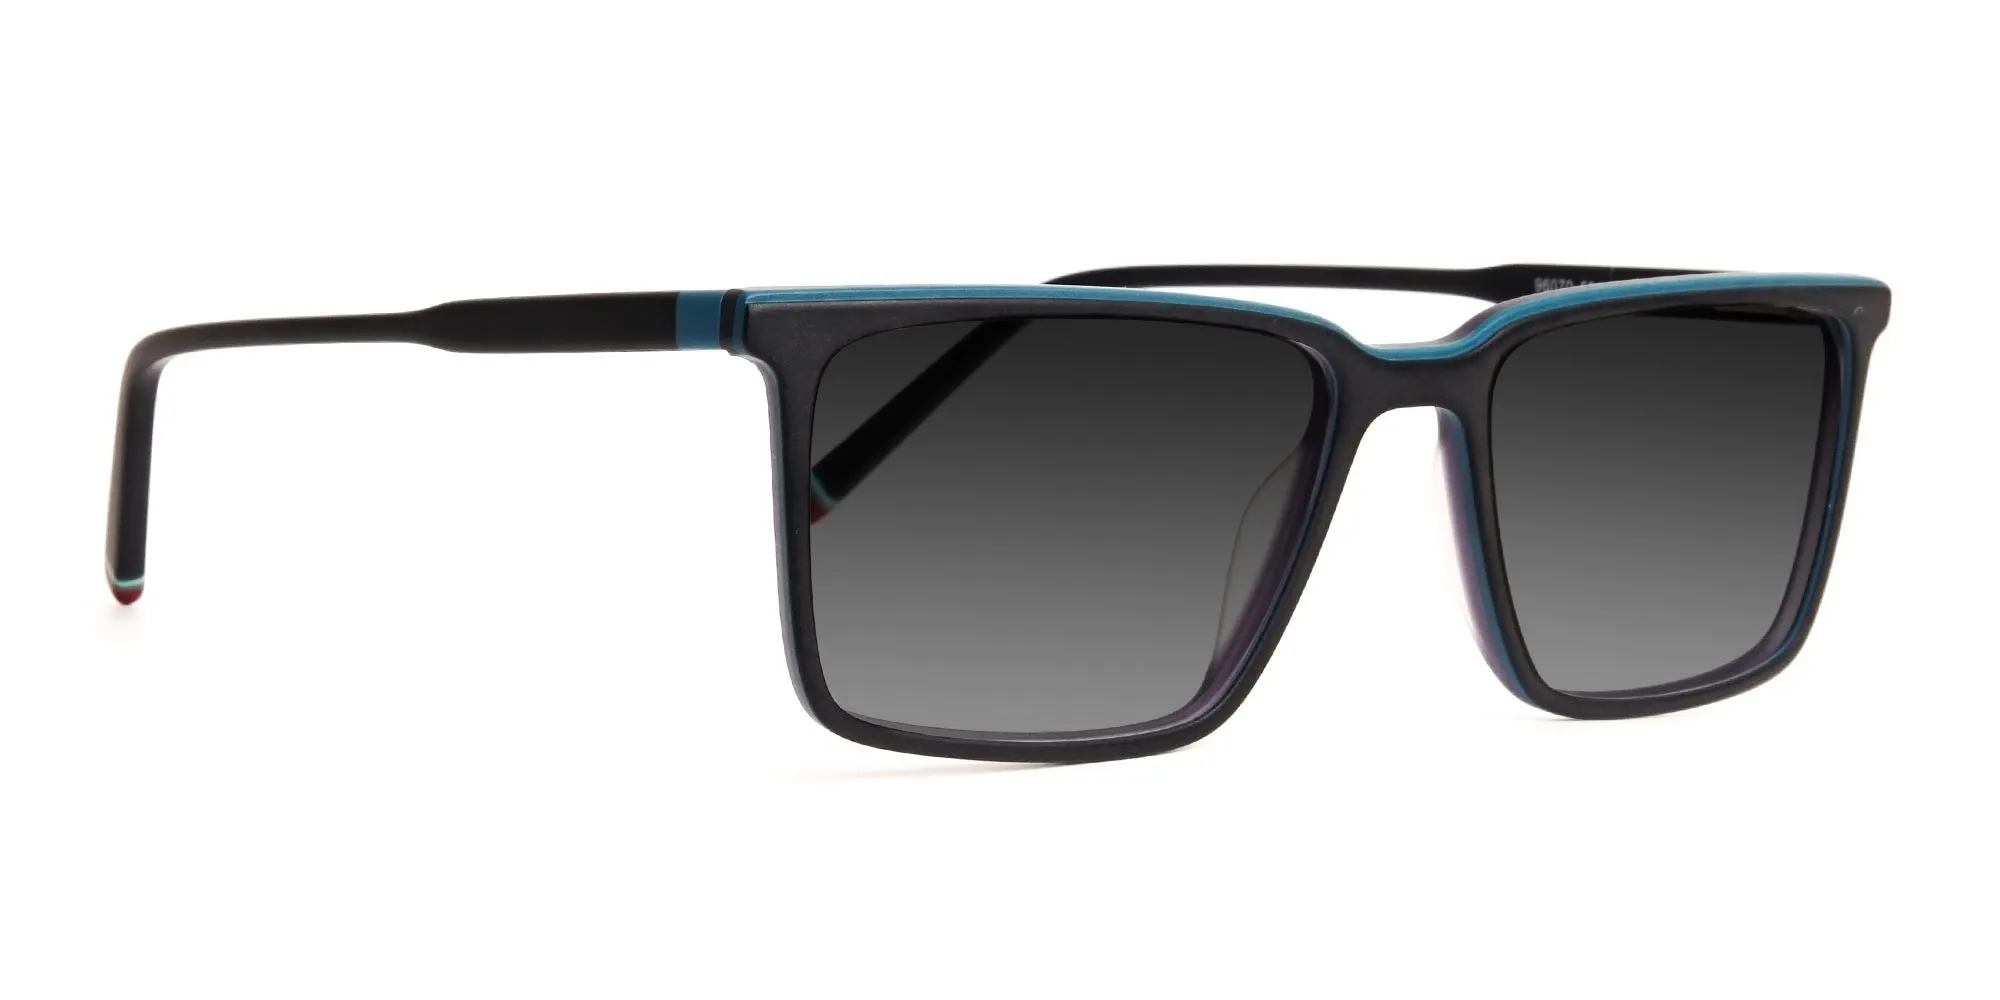 black-and-teal-rectangular-full-rim-grey-tinted-sunglasses-frames-2